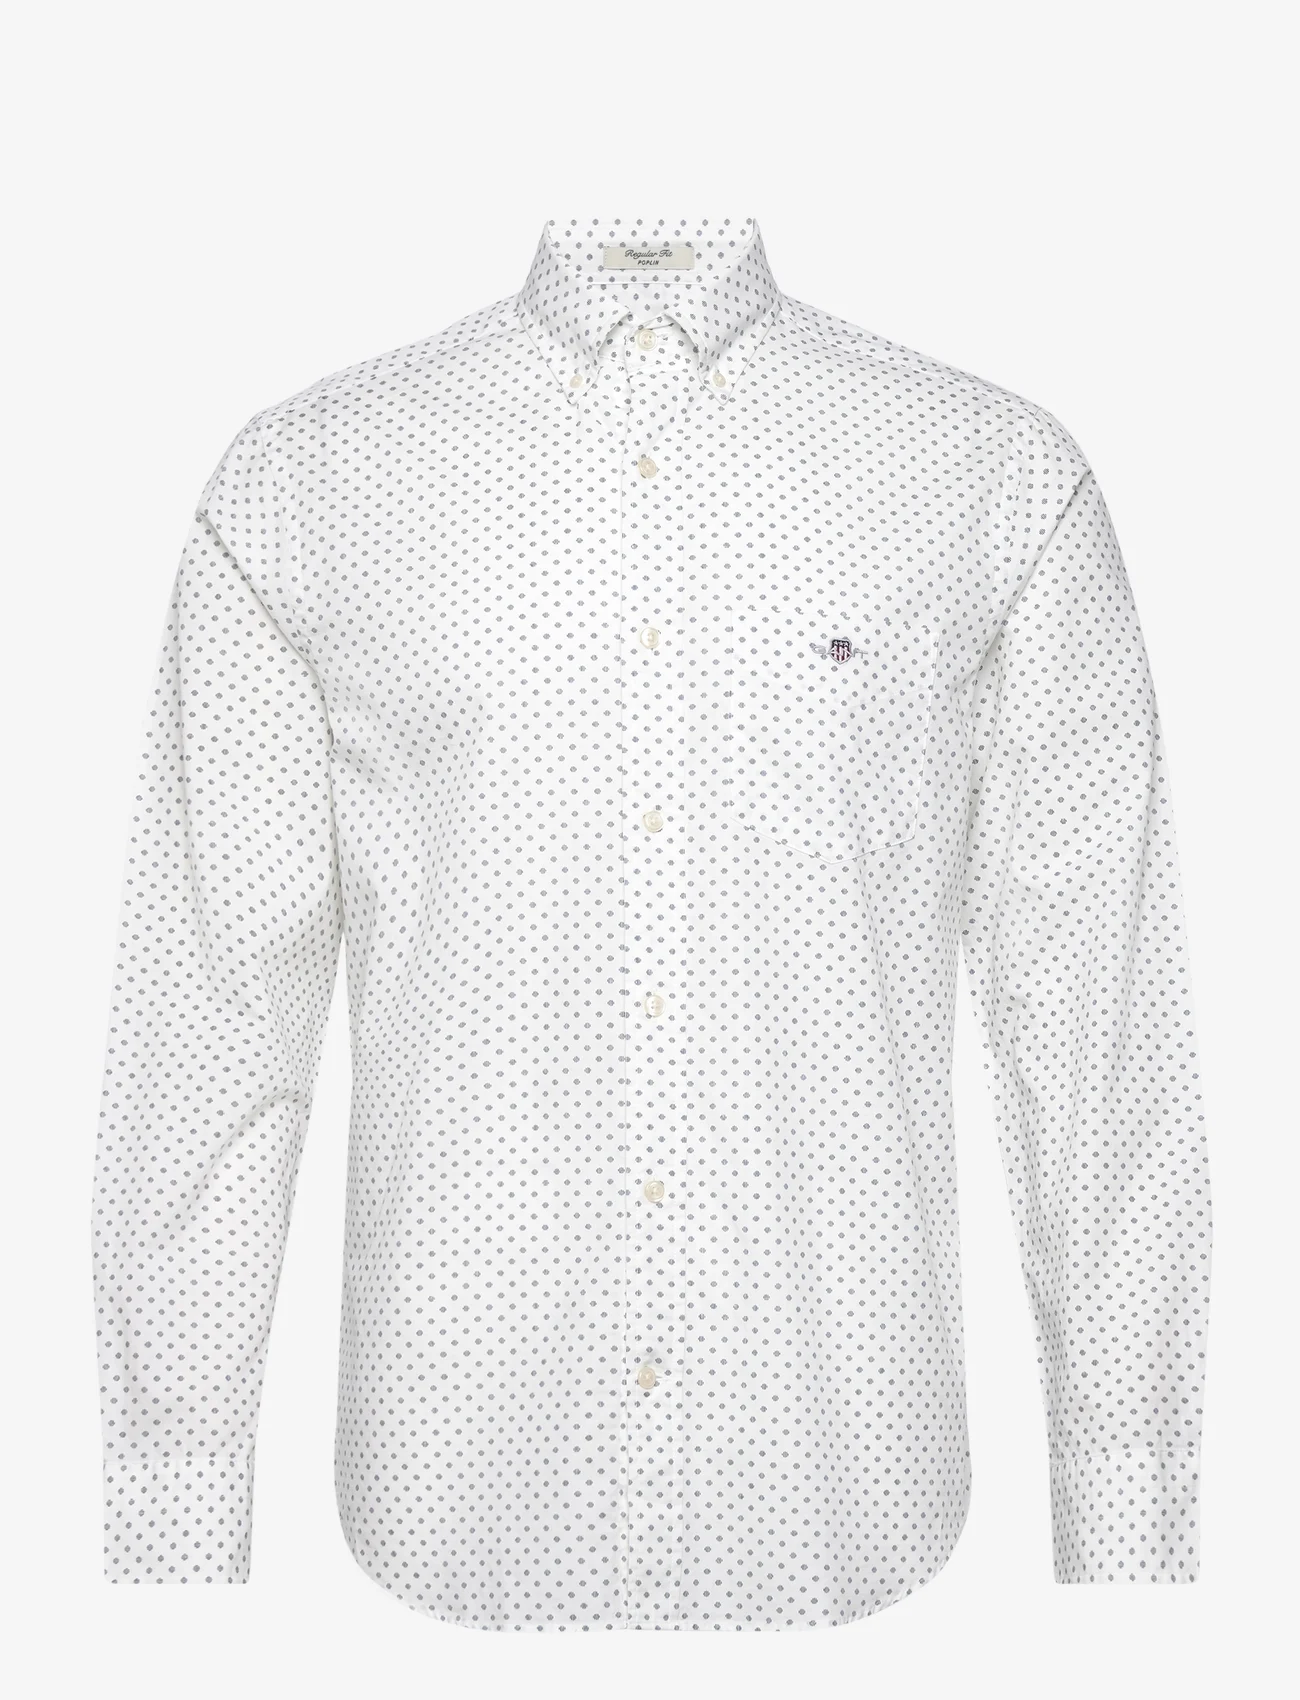 GANT - REG MICRO PRINT SHIRT - casual shirts - eggshell - 0